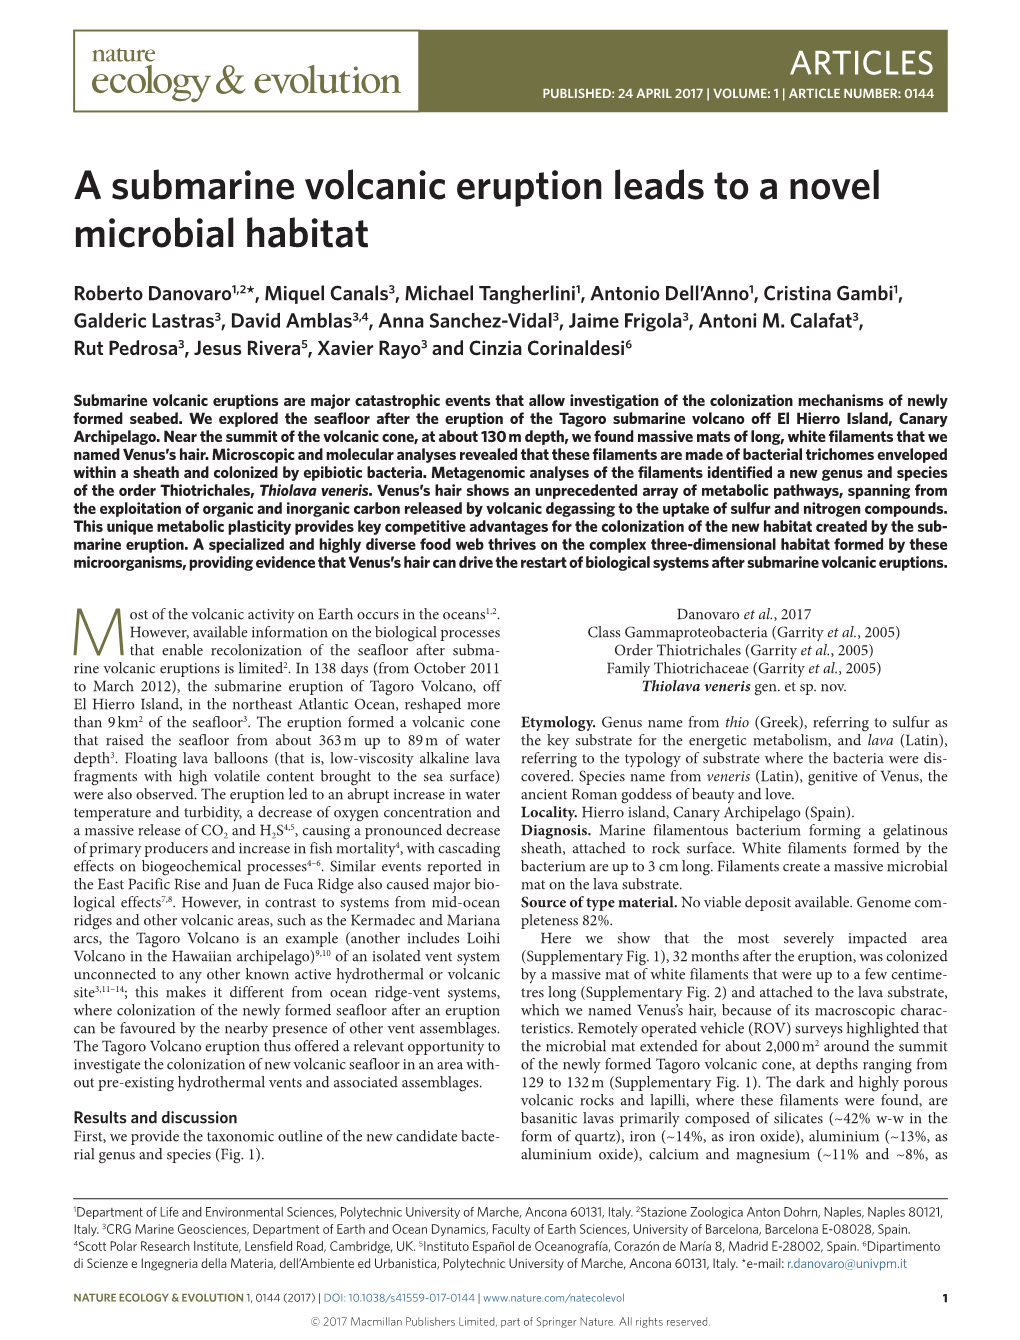 A Submarine Volcanic Eruption Leads to a Novel Microbial Habitat